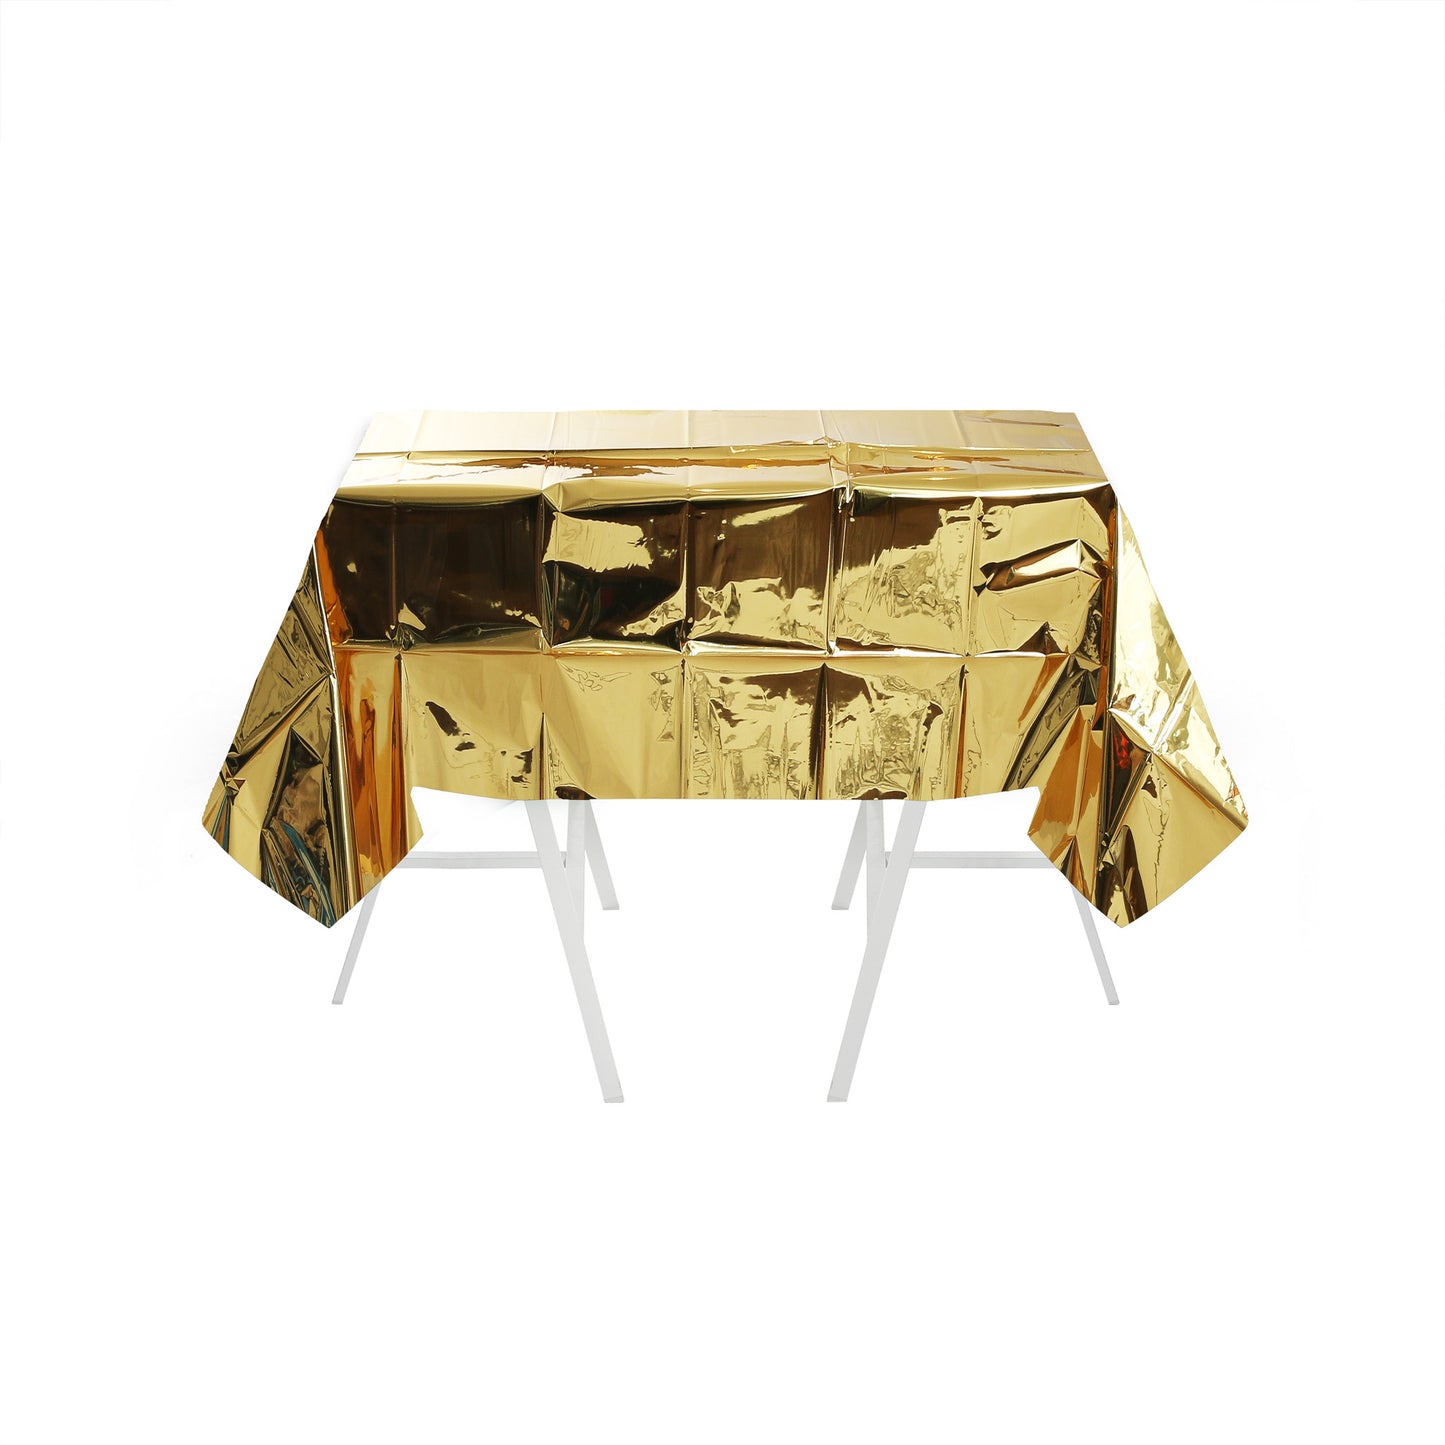 GOLD FOIL PVC DISPOSABLE TABLE COVER